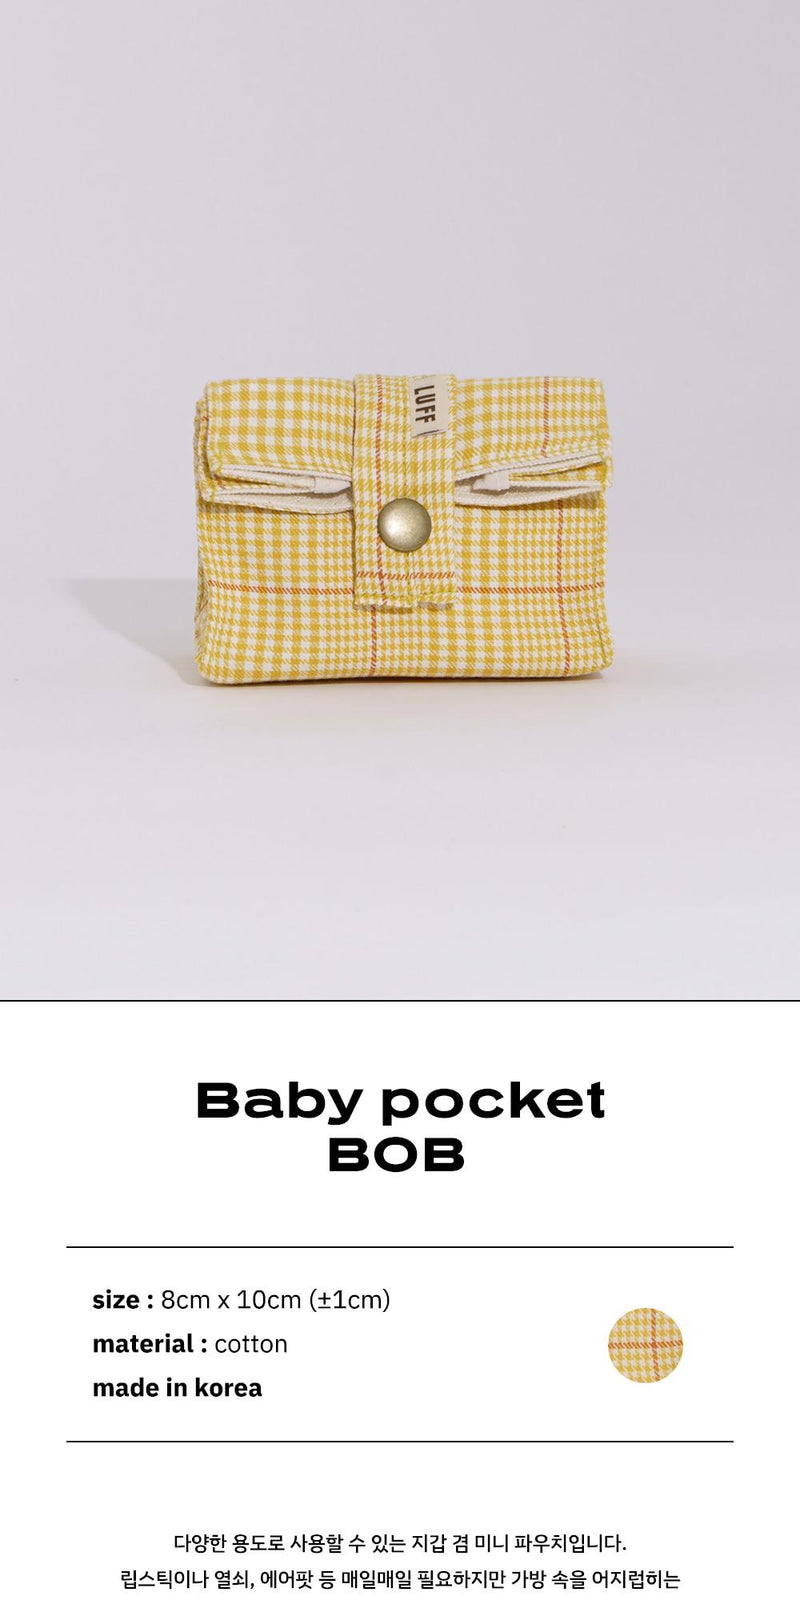 baby pocket - bob